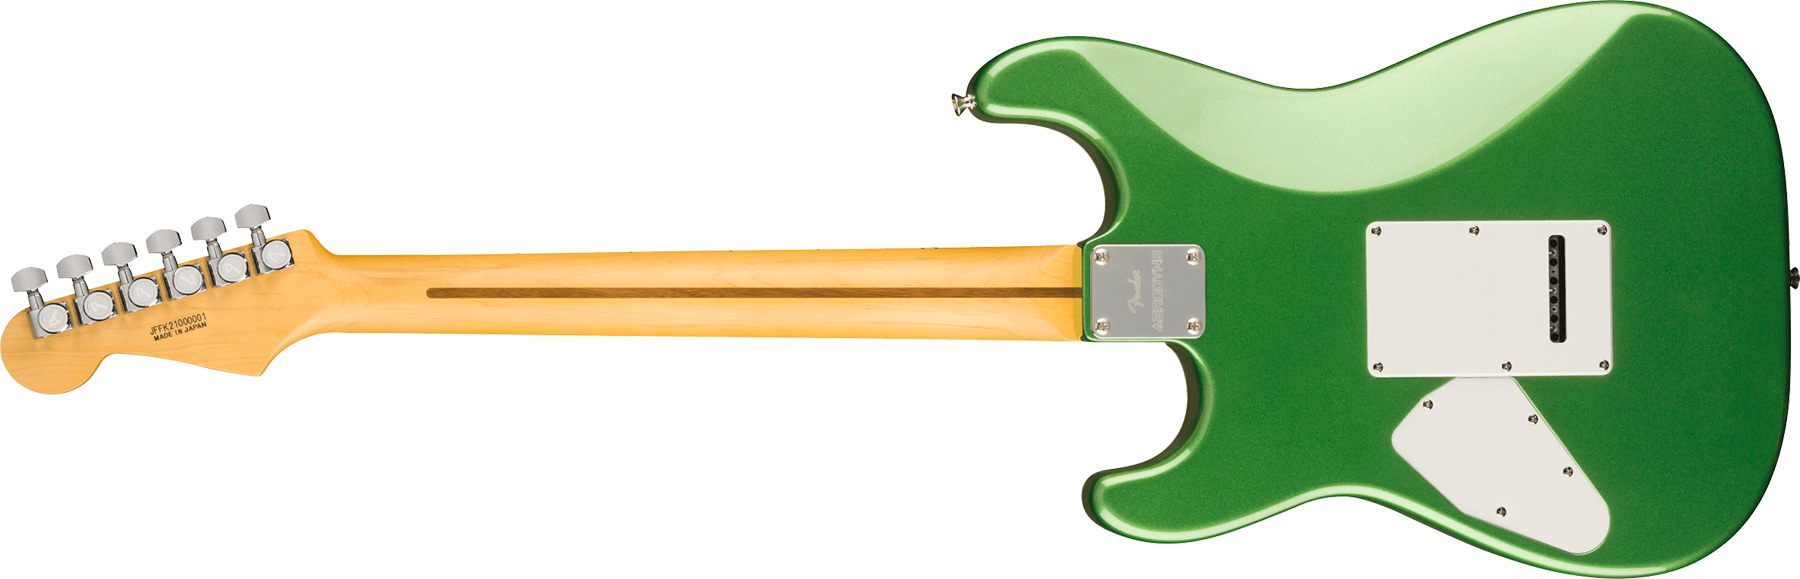 Fender Strat Aerodyne Special Jap Trem Hss Mn - Speed Green Metallic - Str shape electric guitar - Variation 1